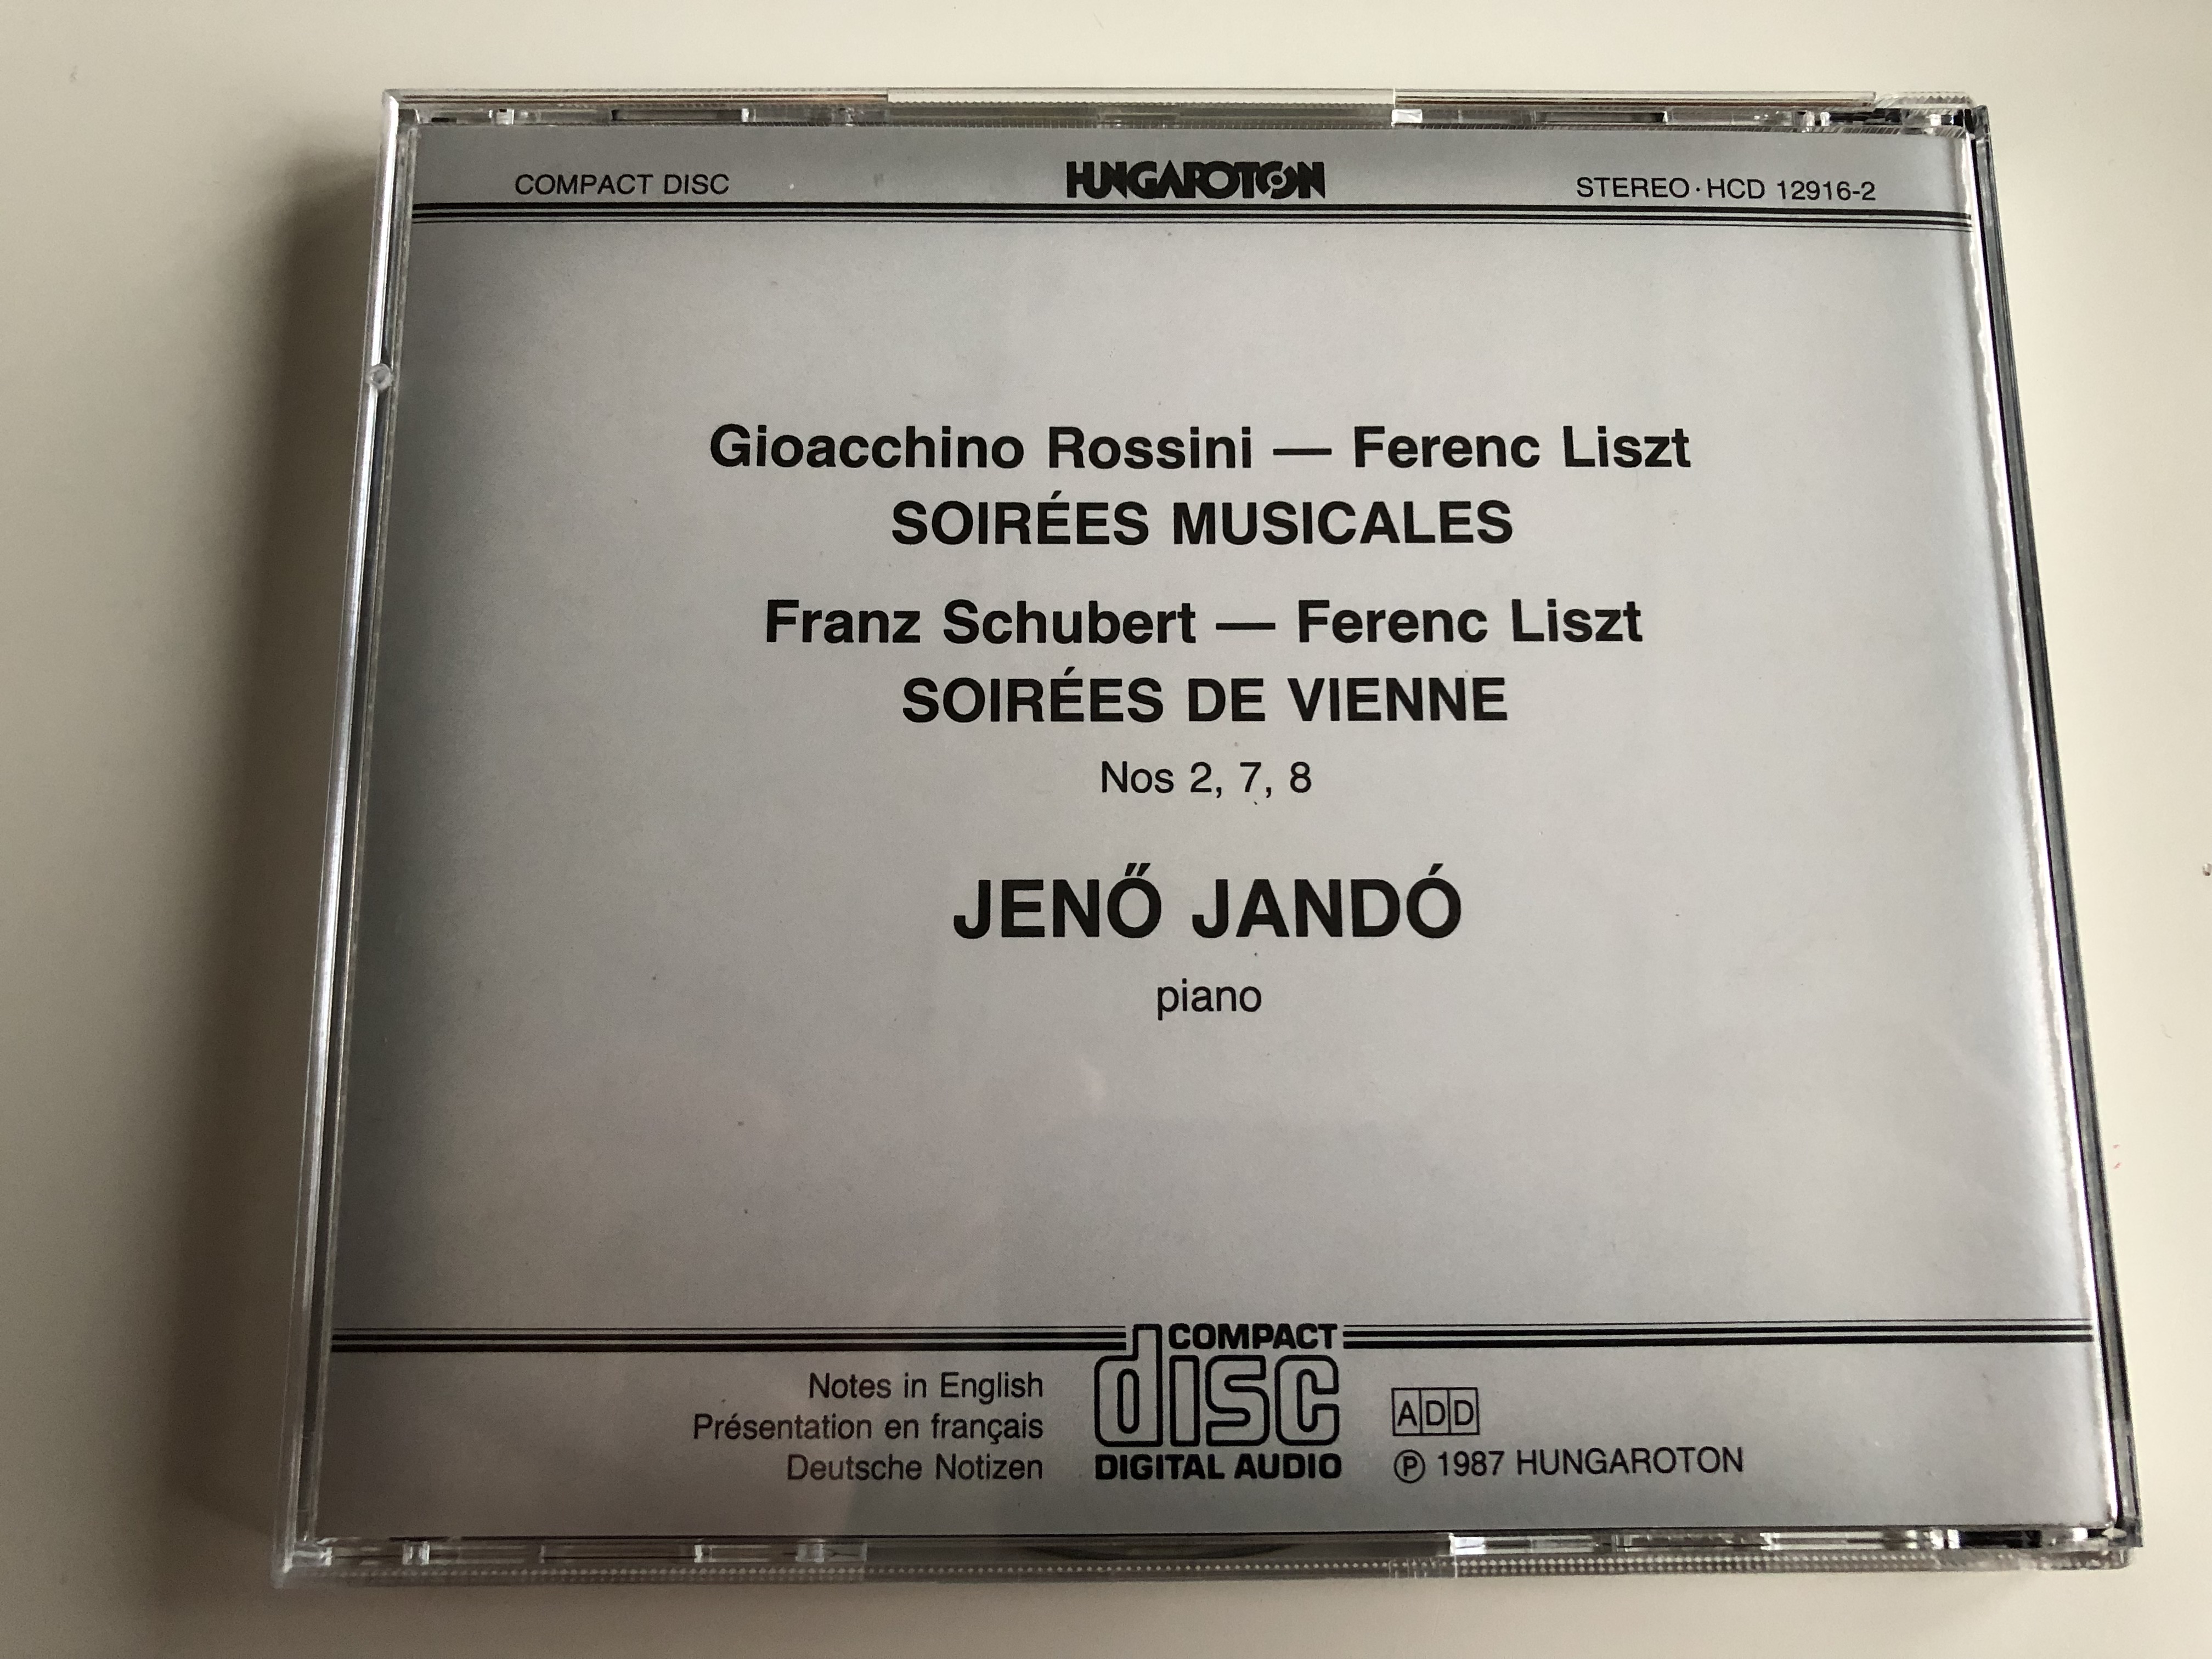 rossini-liszt-soir-es-musicales-liszt-schubert-soir-es-de-vienne-performed-by-jen-jand-piano-hungaroton-classic-hcd-12916-2-6-.jpg